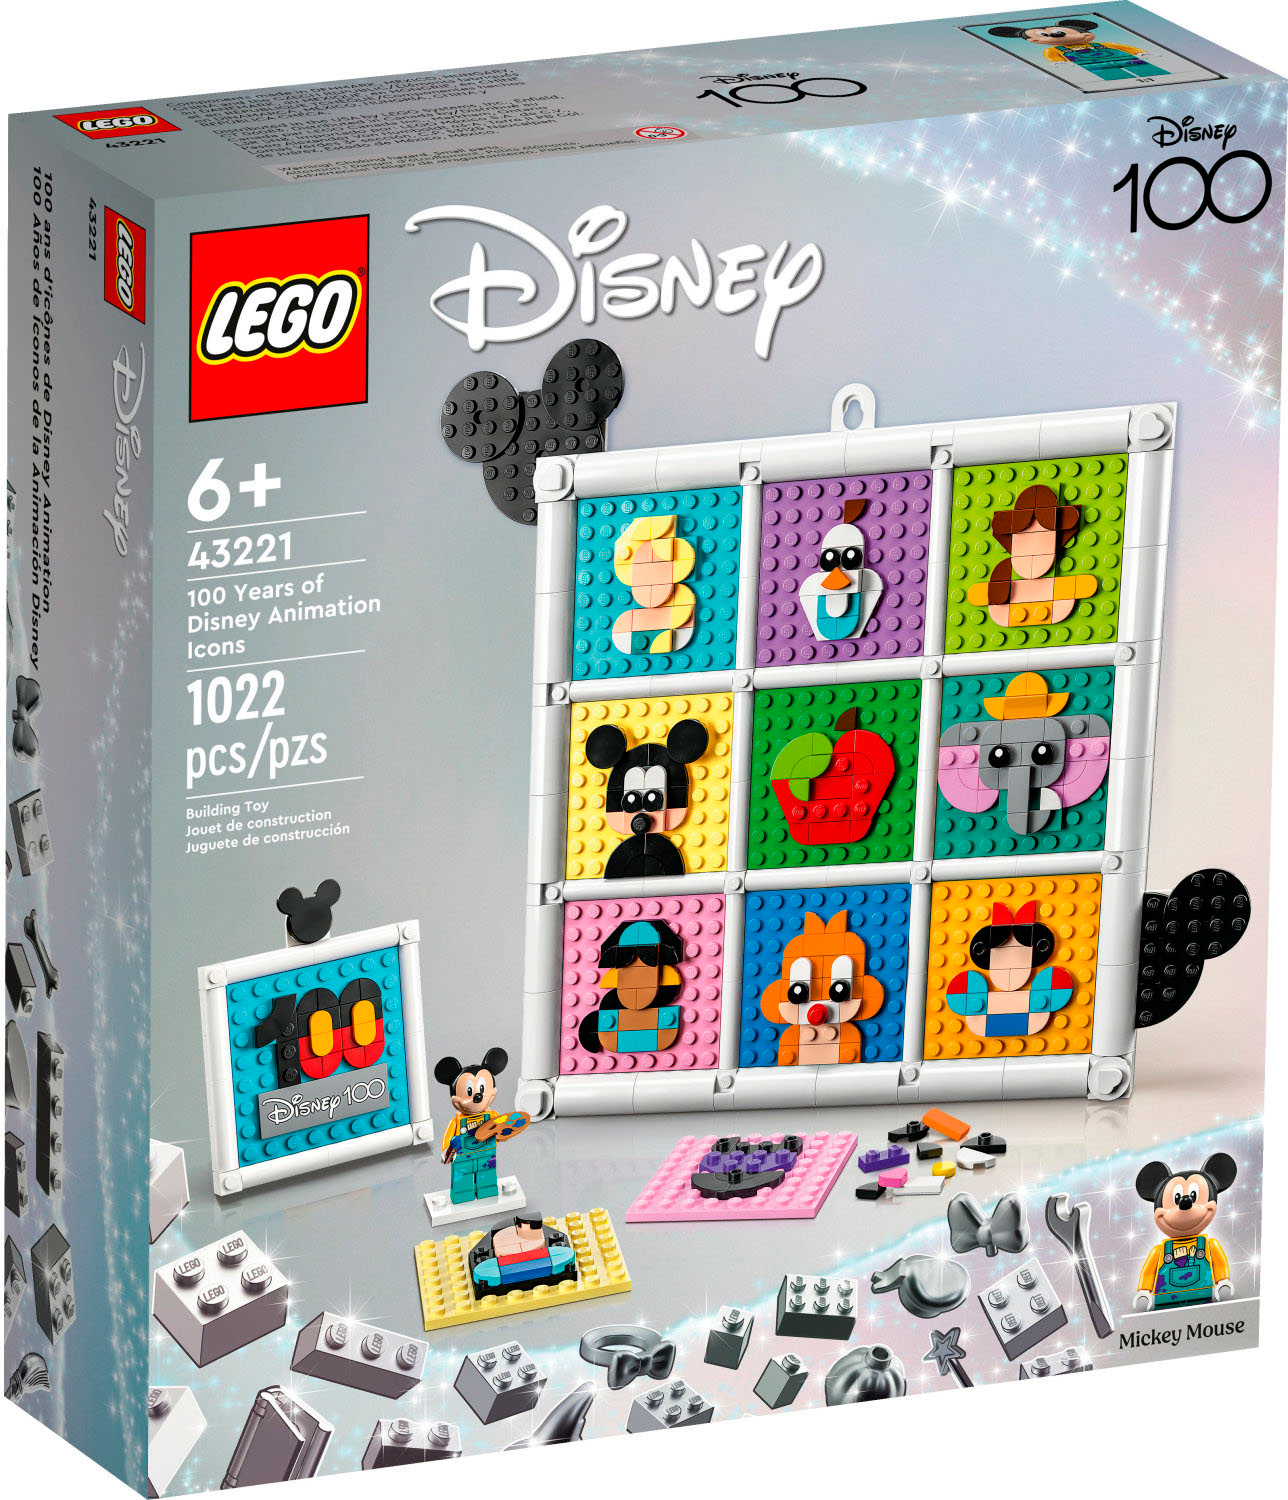 LEGO Disney 100 Years of Disney Animation Icons 43221 6427583 - Best Buy